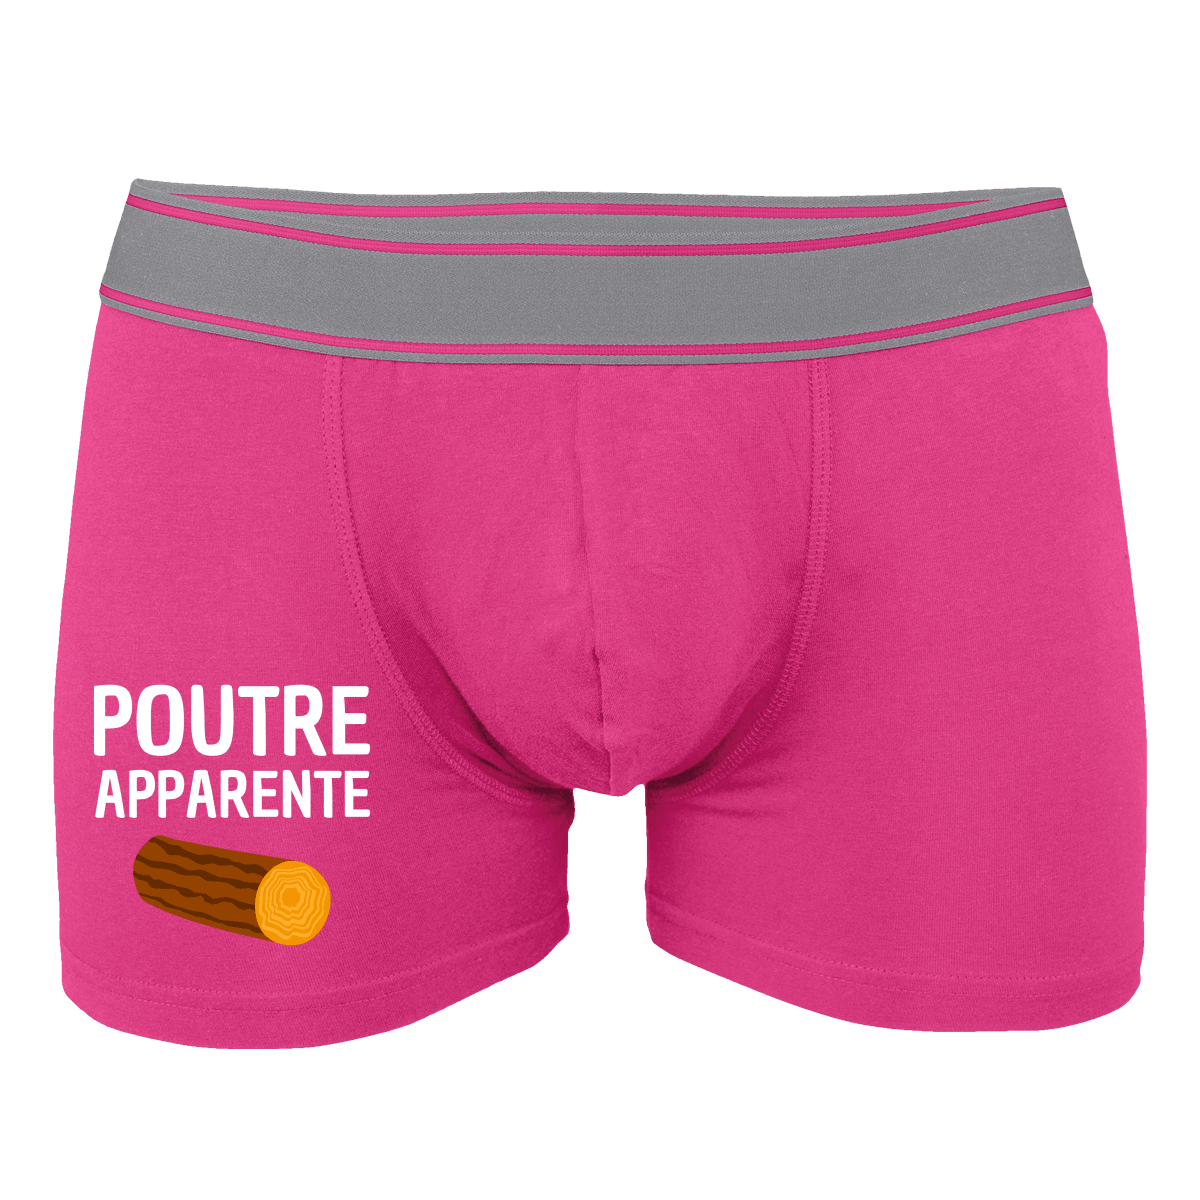 Caleçon "Poutre apparente" - French Humour